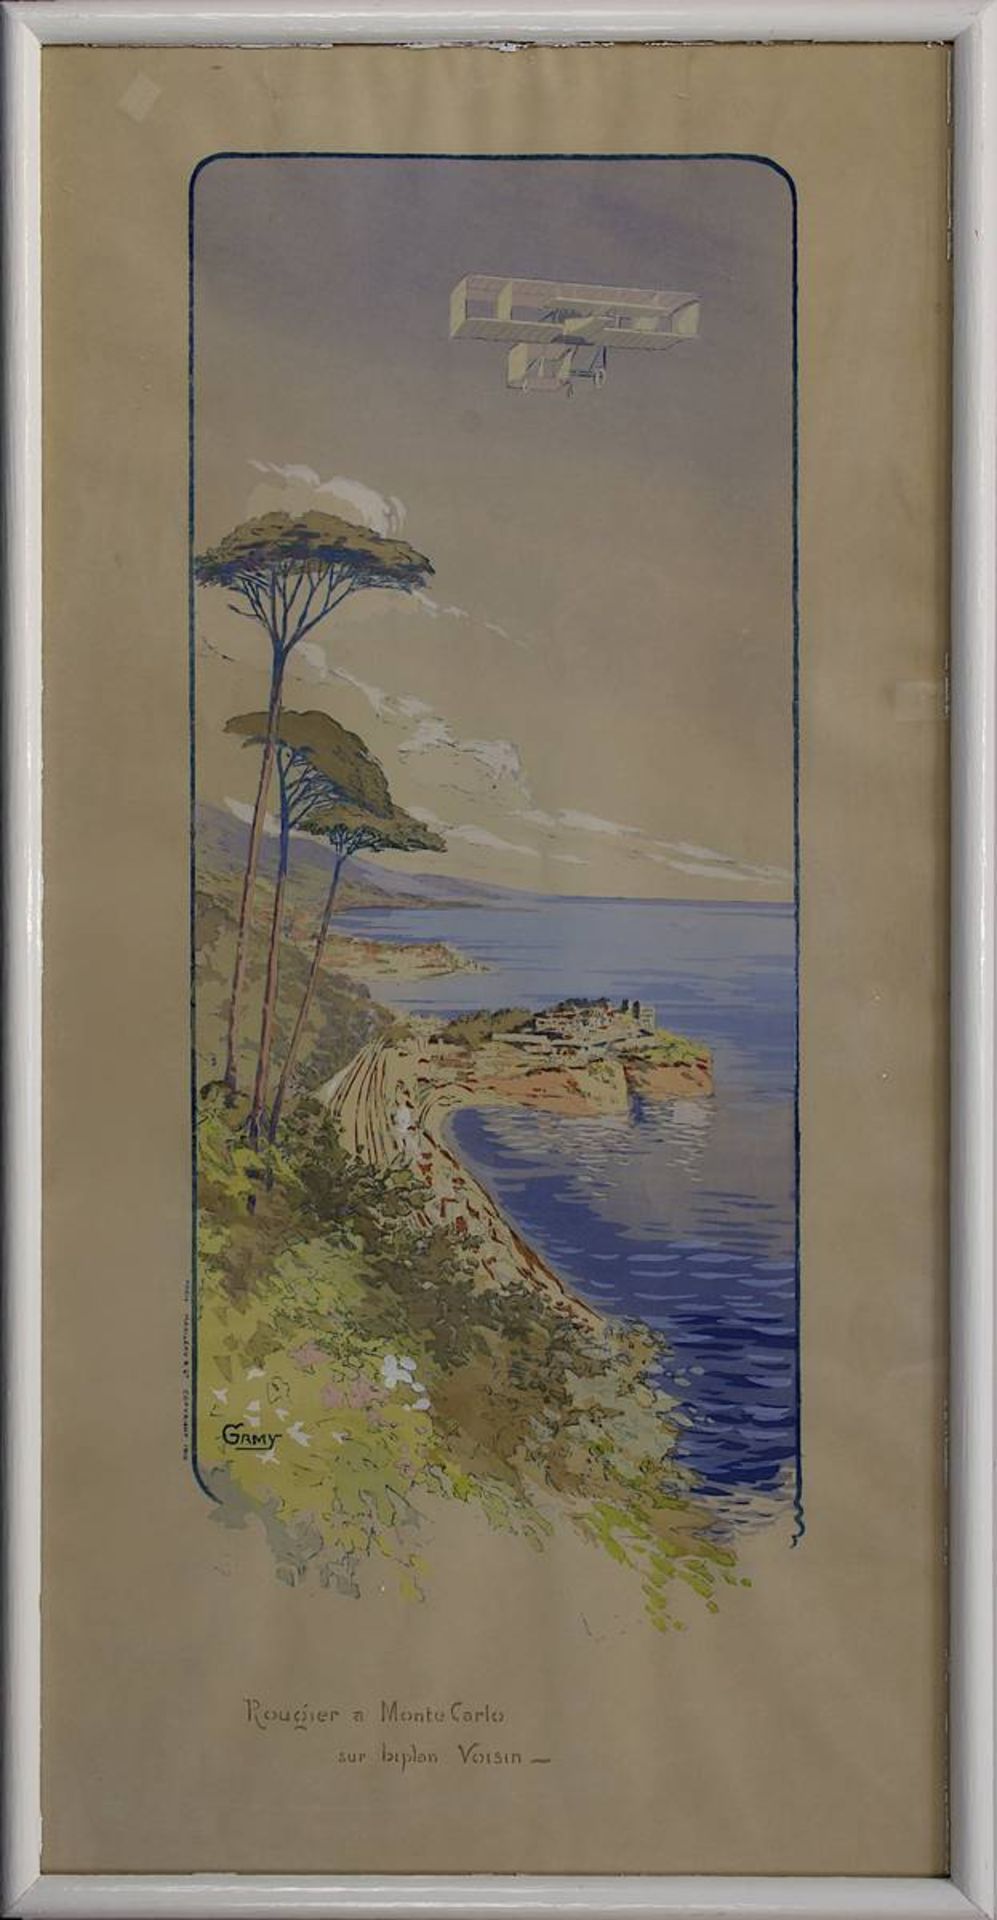 Gamy, Marguerite (1883 - 1936), "Rougier a Monte Carlo sur biplan Voisin", Farblithographie um 1910,